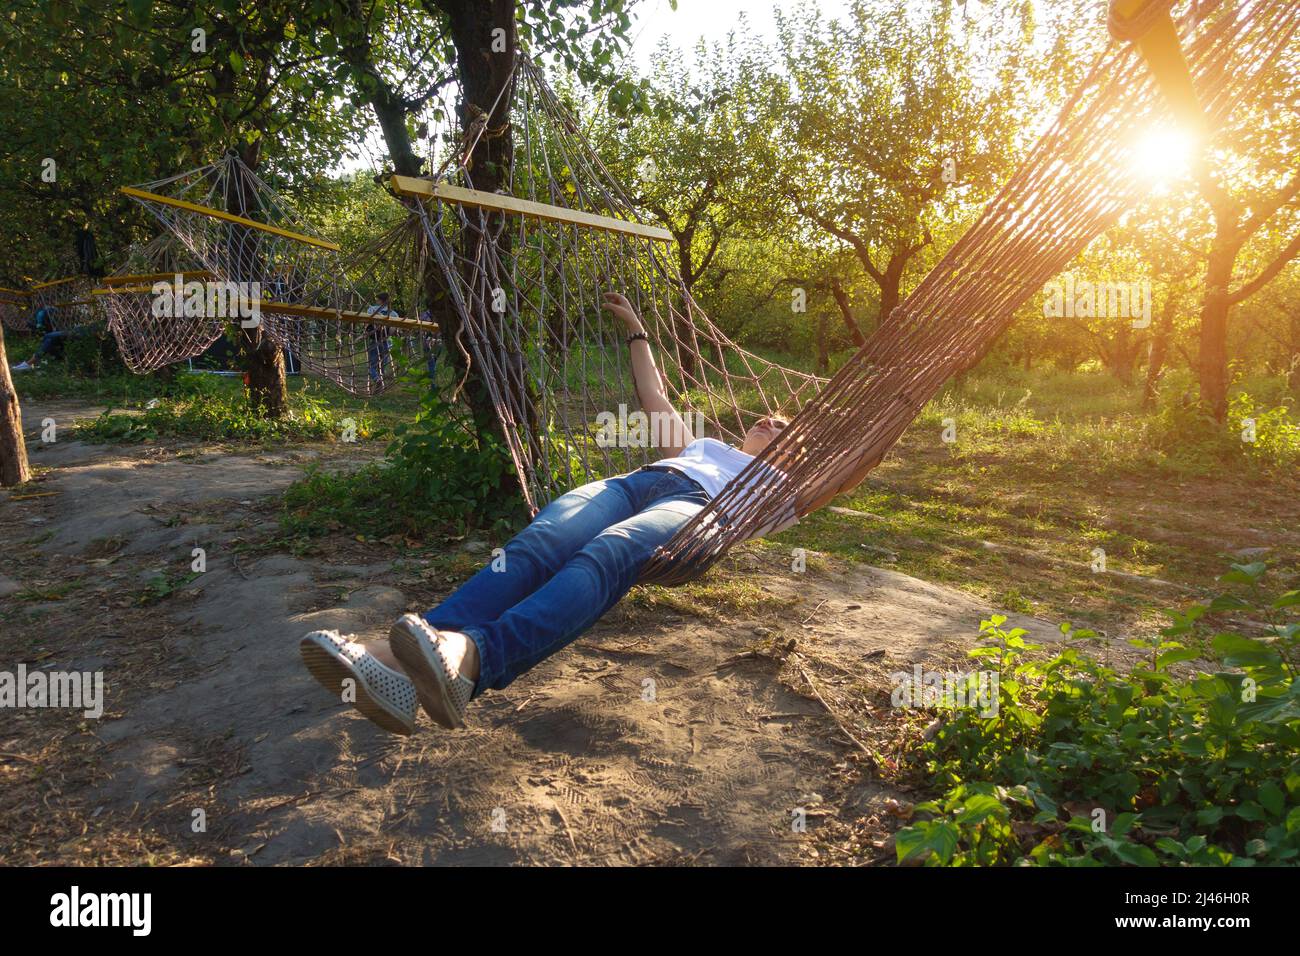 Girl lies on a hammock in the garden. Stock Photo